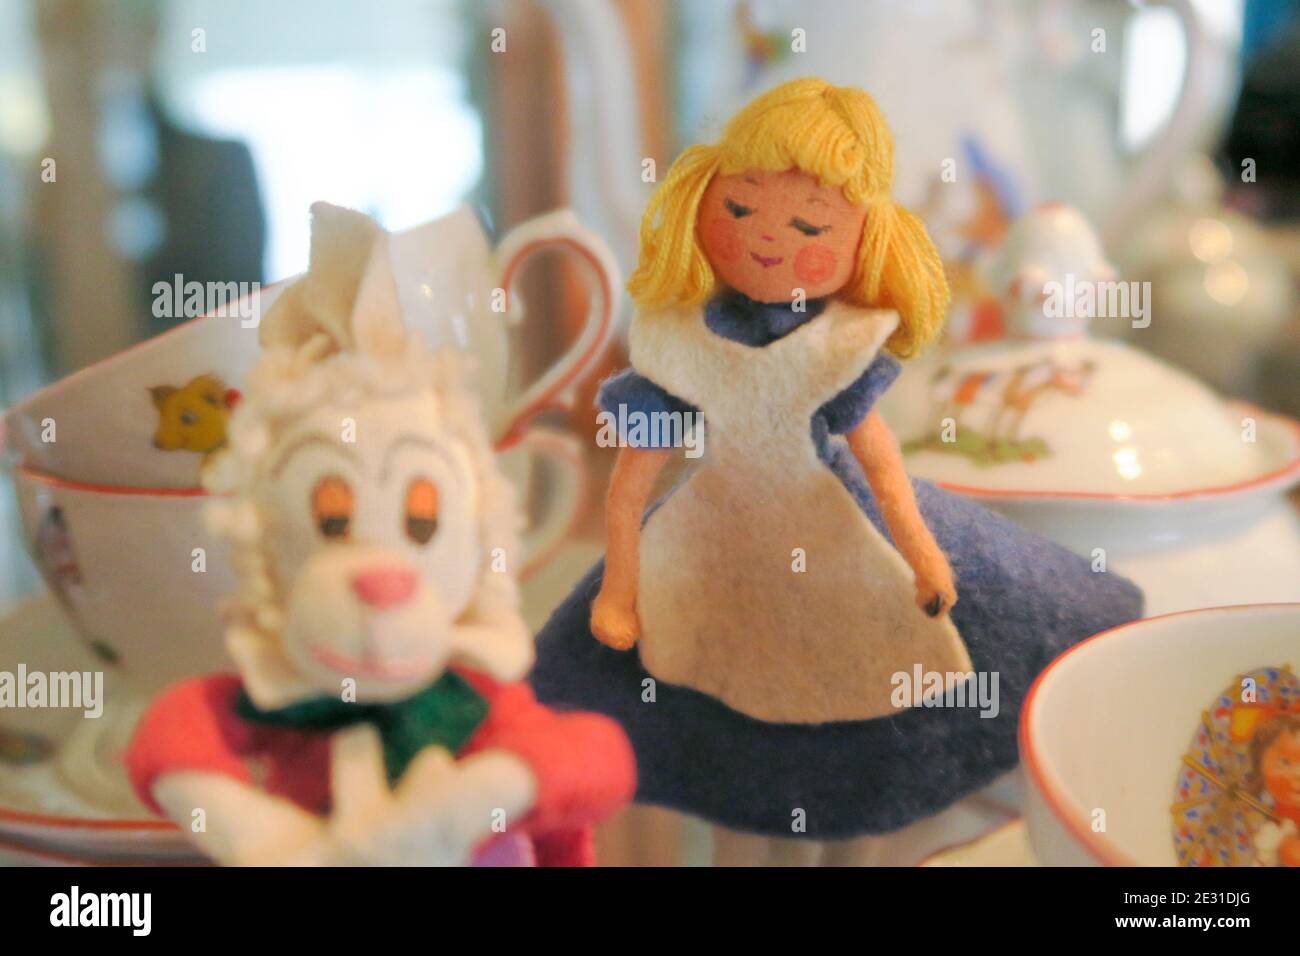 Vintage 1950s fairytale figures among a child's tea set. Stock Photo